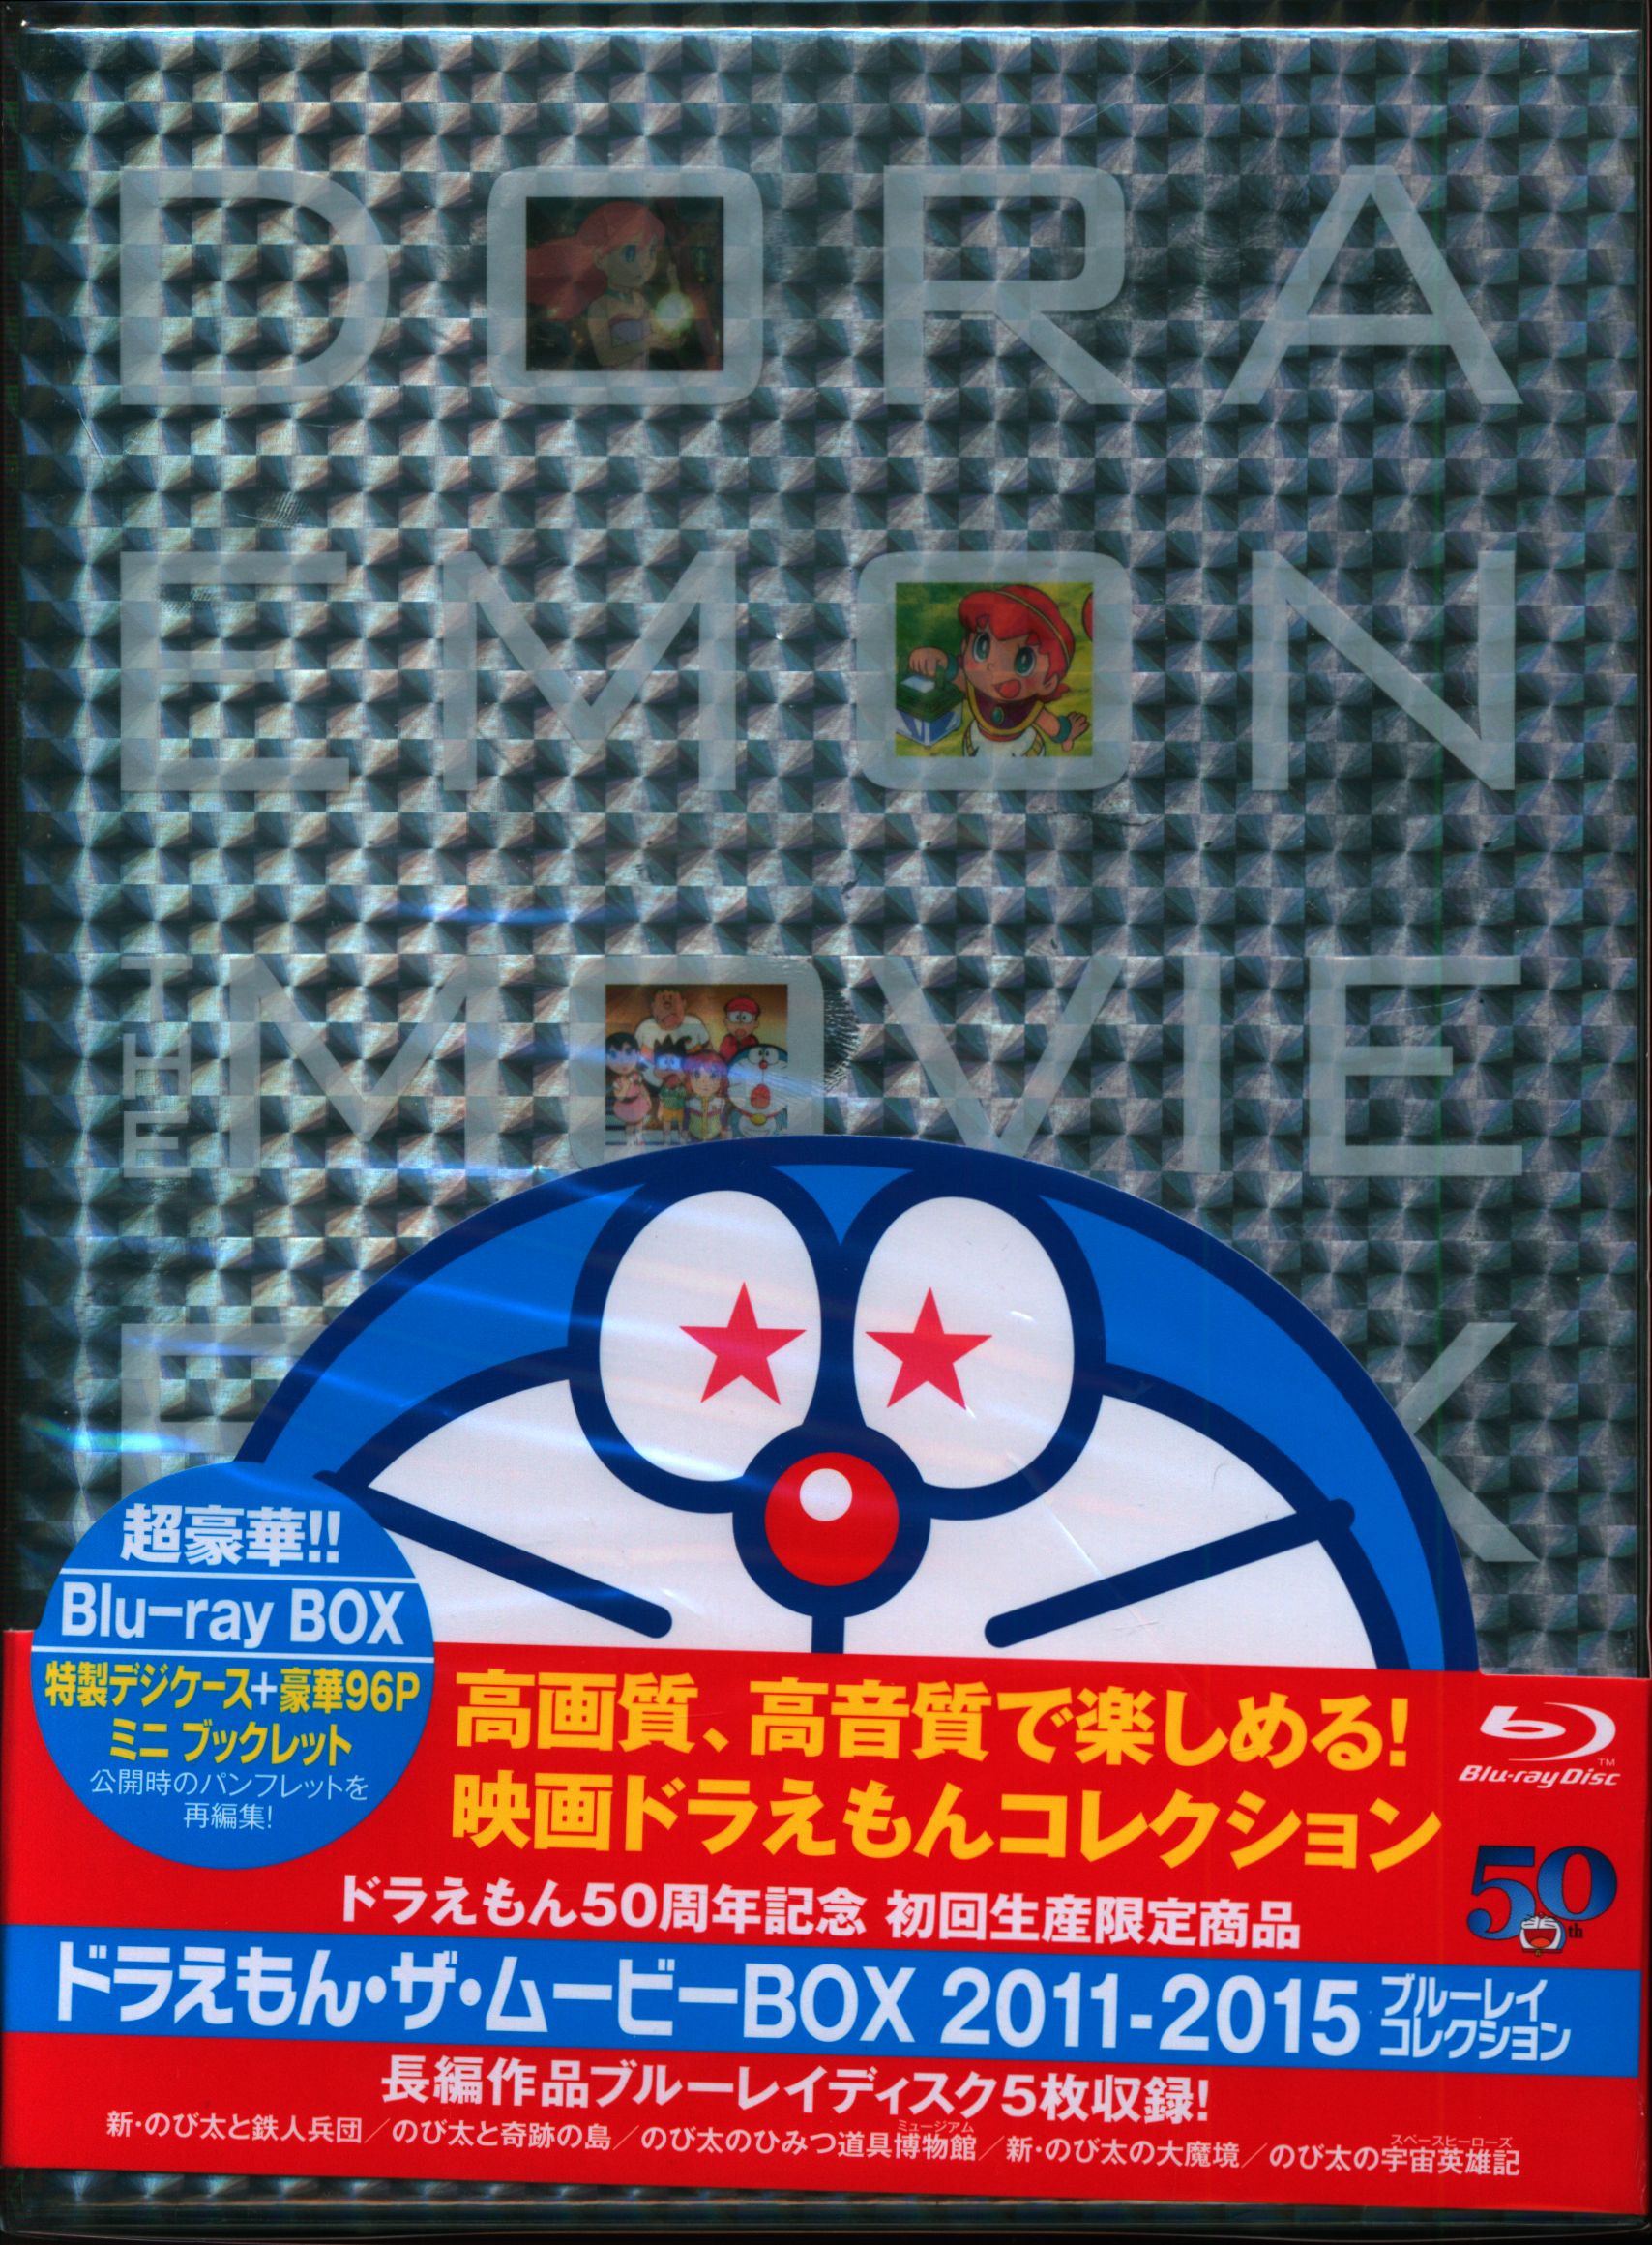 Doraemon The Movie Box ブルーレイ コレクション 11 15 初回限定生産 まんだらけ Mandarake